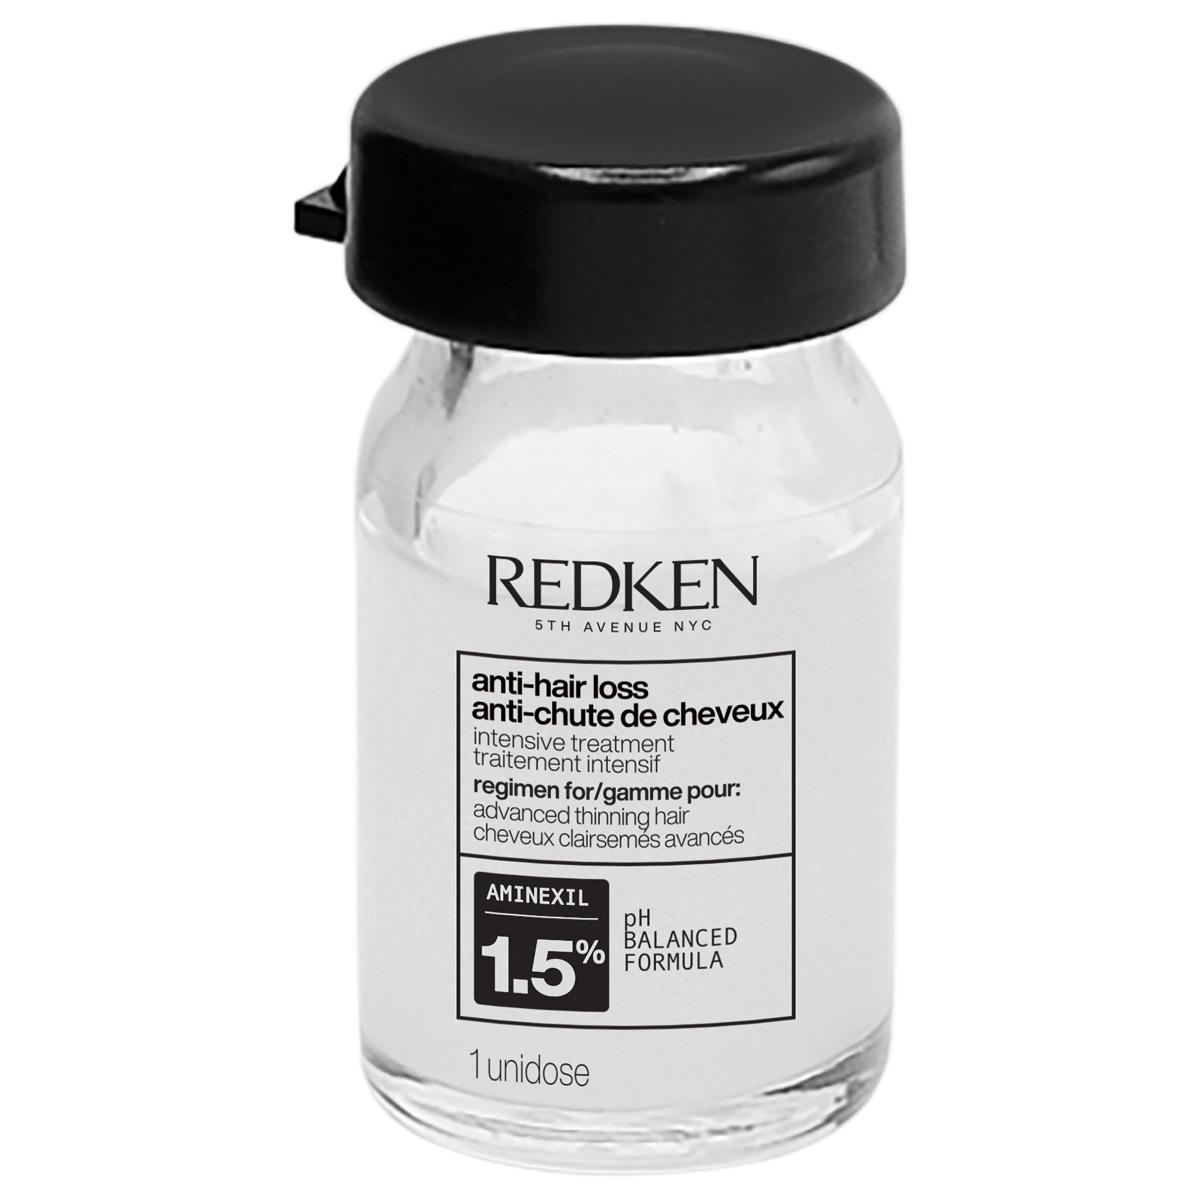 Redken cerafill maximize anti-hair loss intensive treatment Emballage de 10 x 6 ml - 2